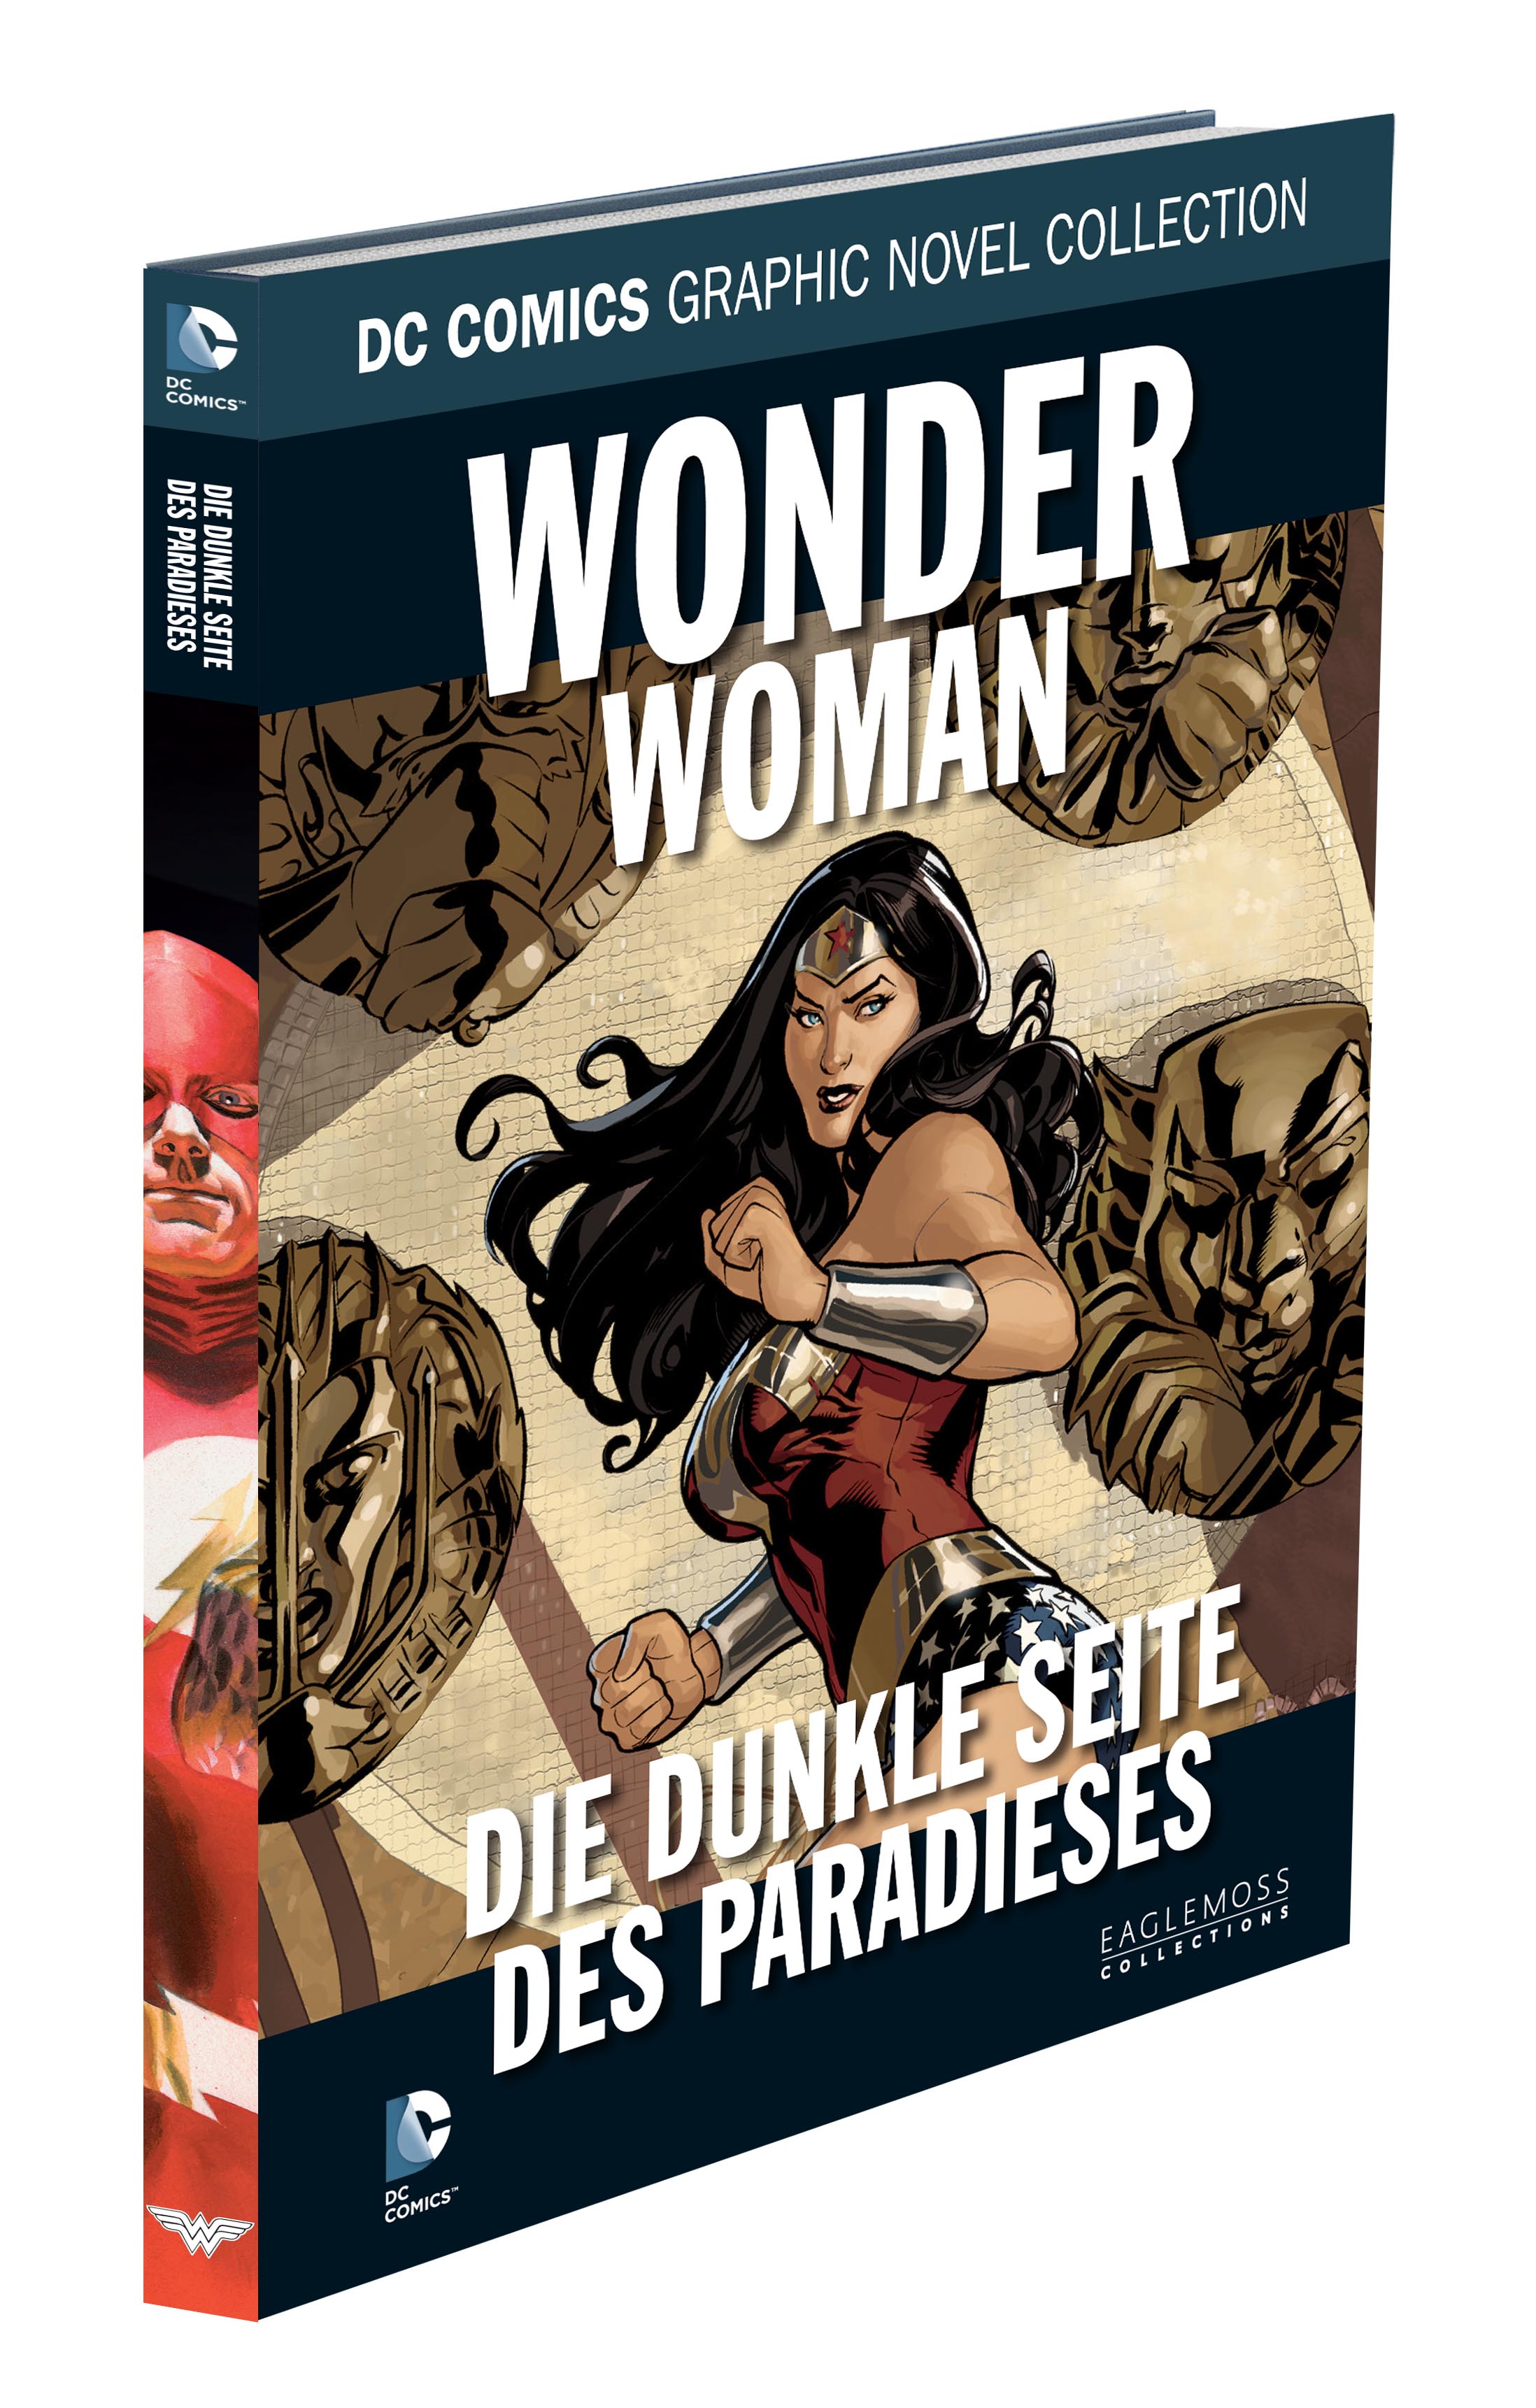 DC Comics Graphic Novel Collection Wonder Woman - Die dunkelste Seite des Paradieses